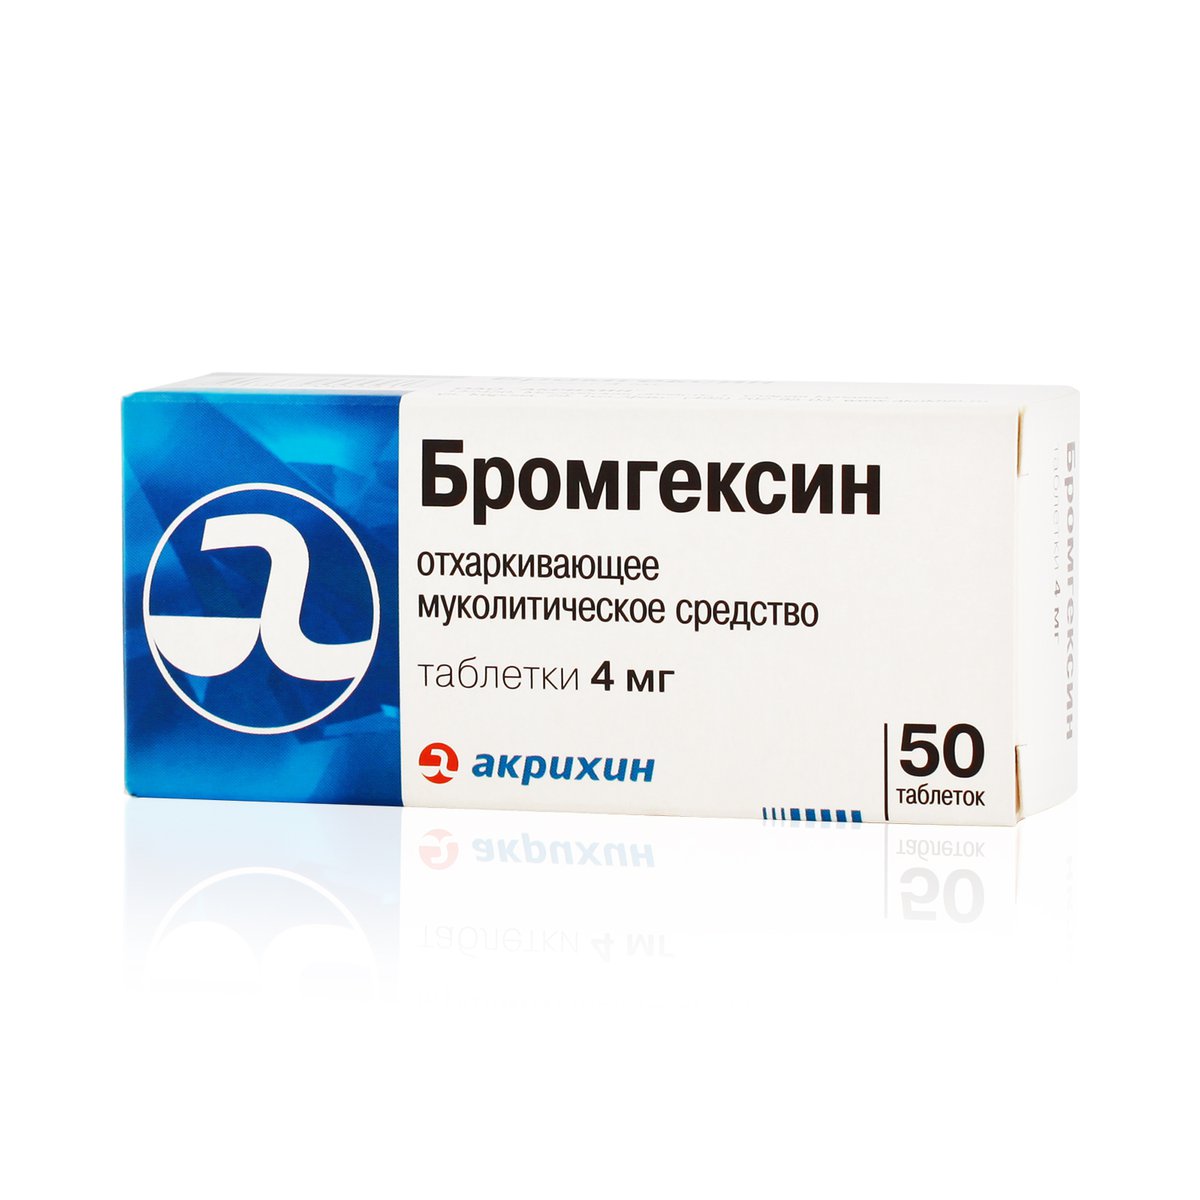 Бромгексин акрихин (таблетки, 50 шт, 4 мг) - цена,  онлайн в .